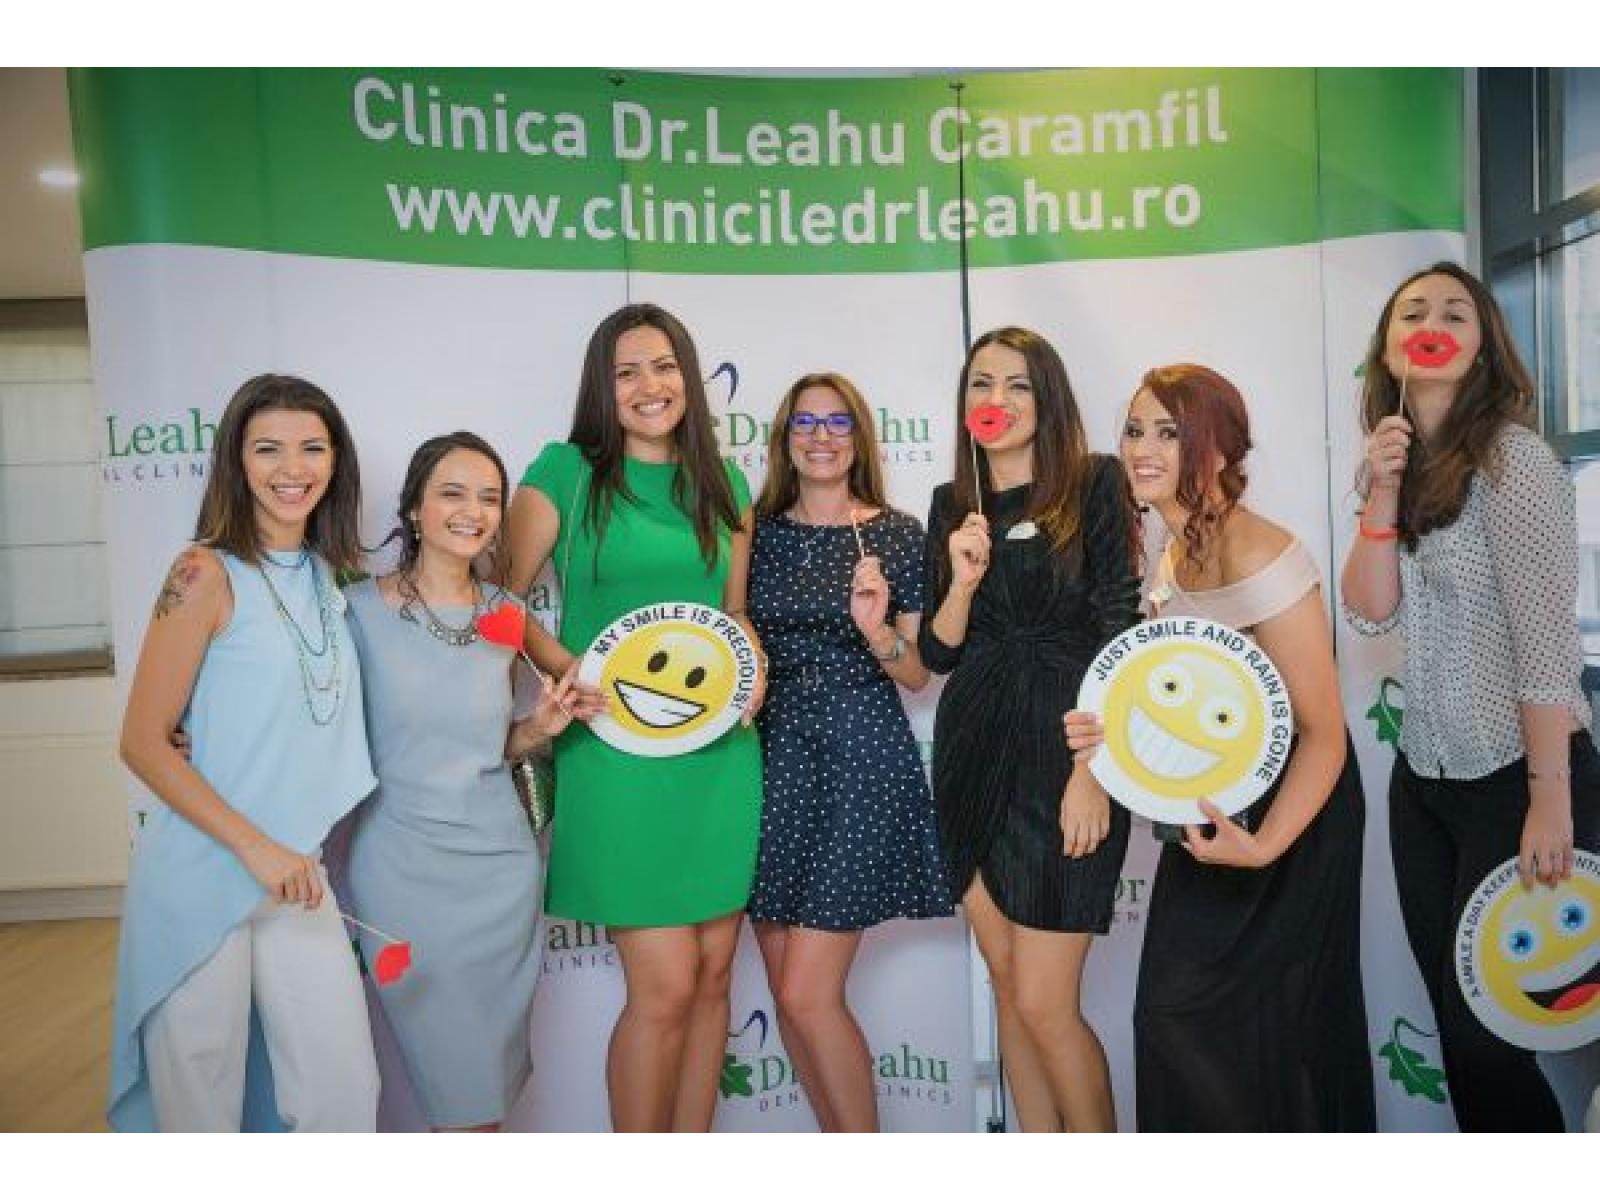 Clinica Dr. Leahu - smile_dr_leahu.jpg